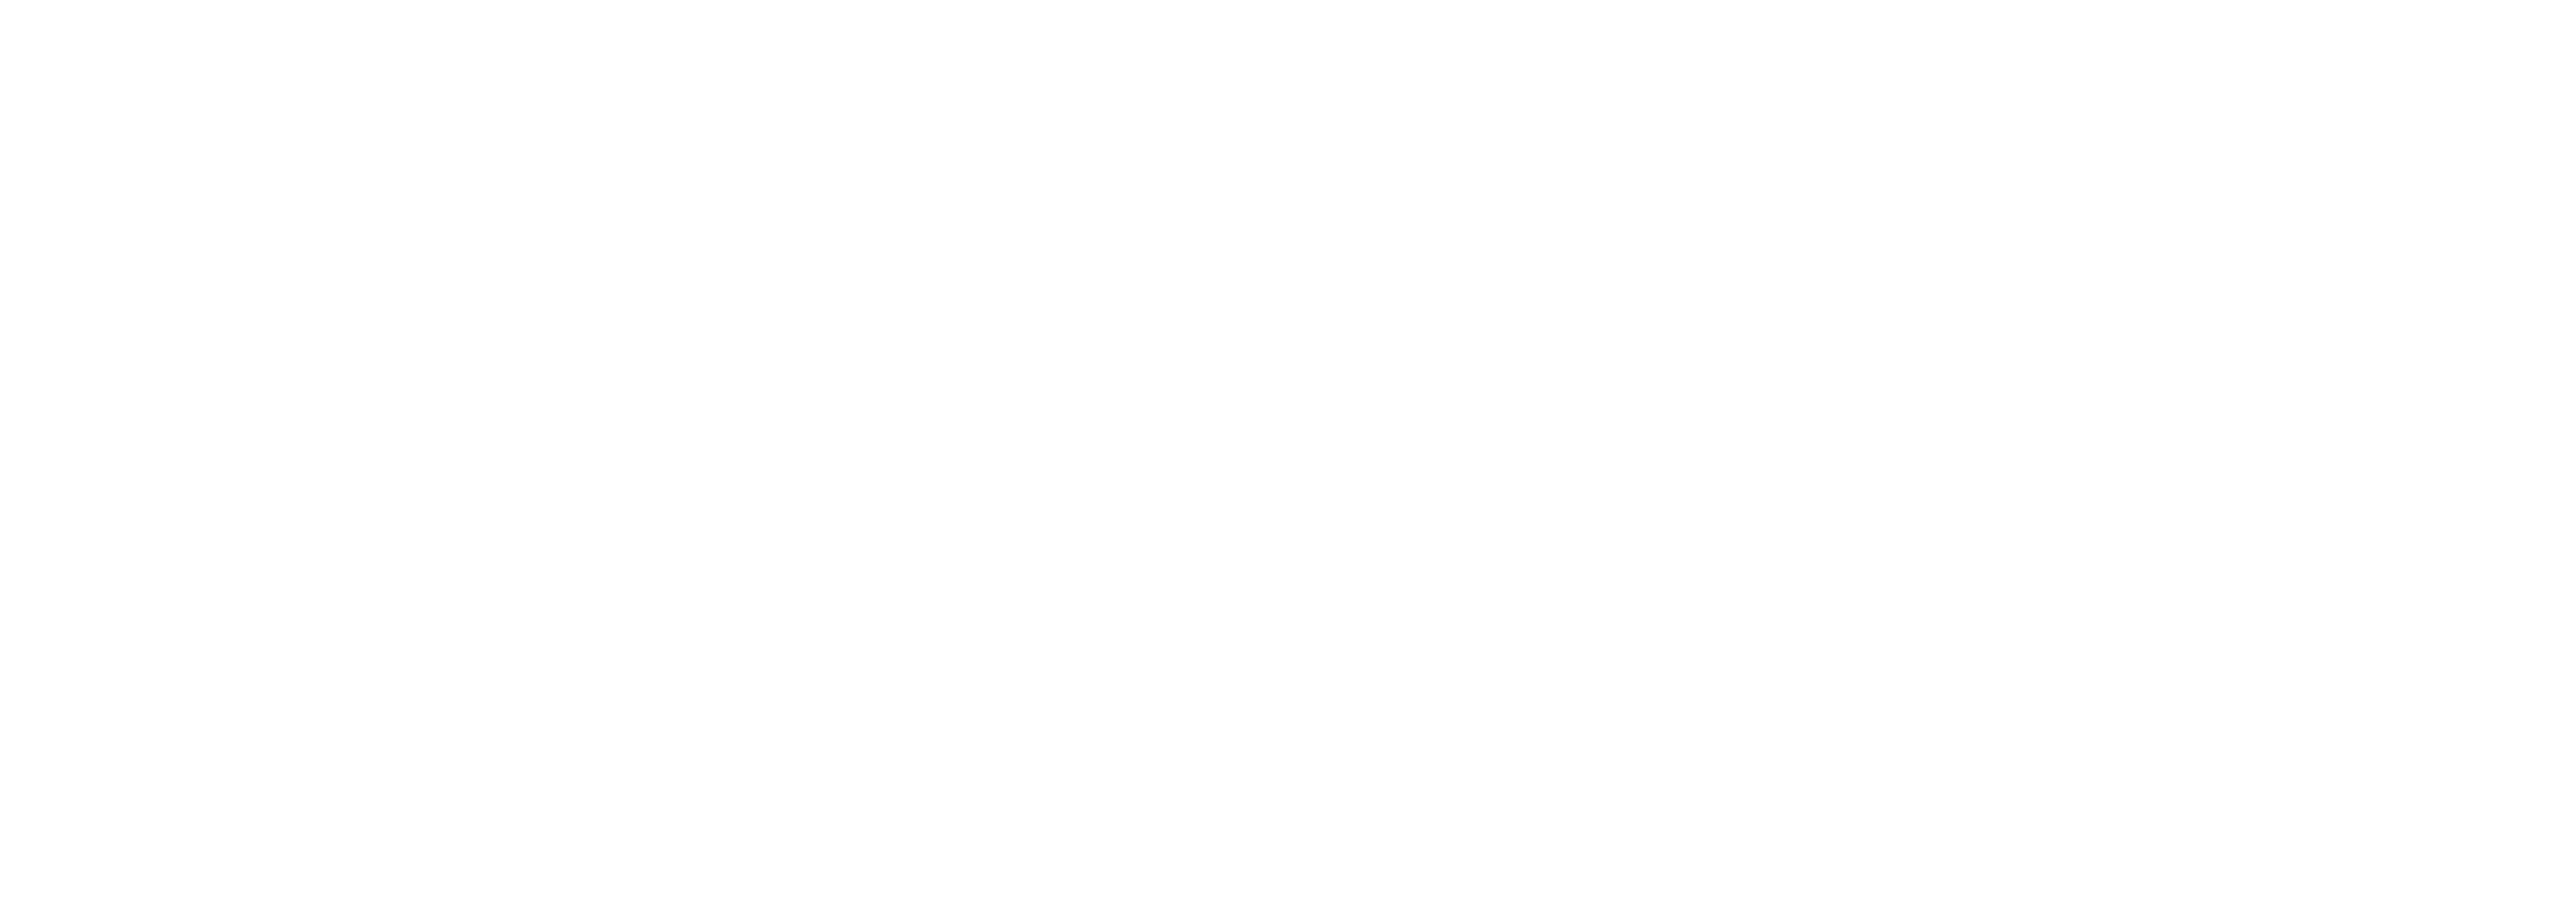 Cornerstone Baptist Church